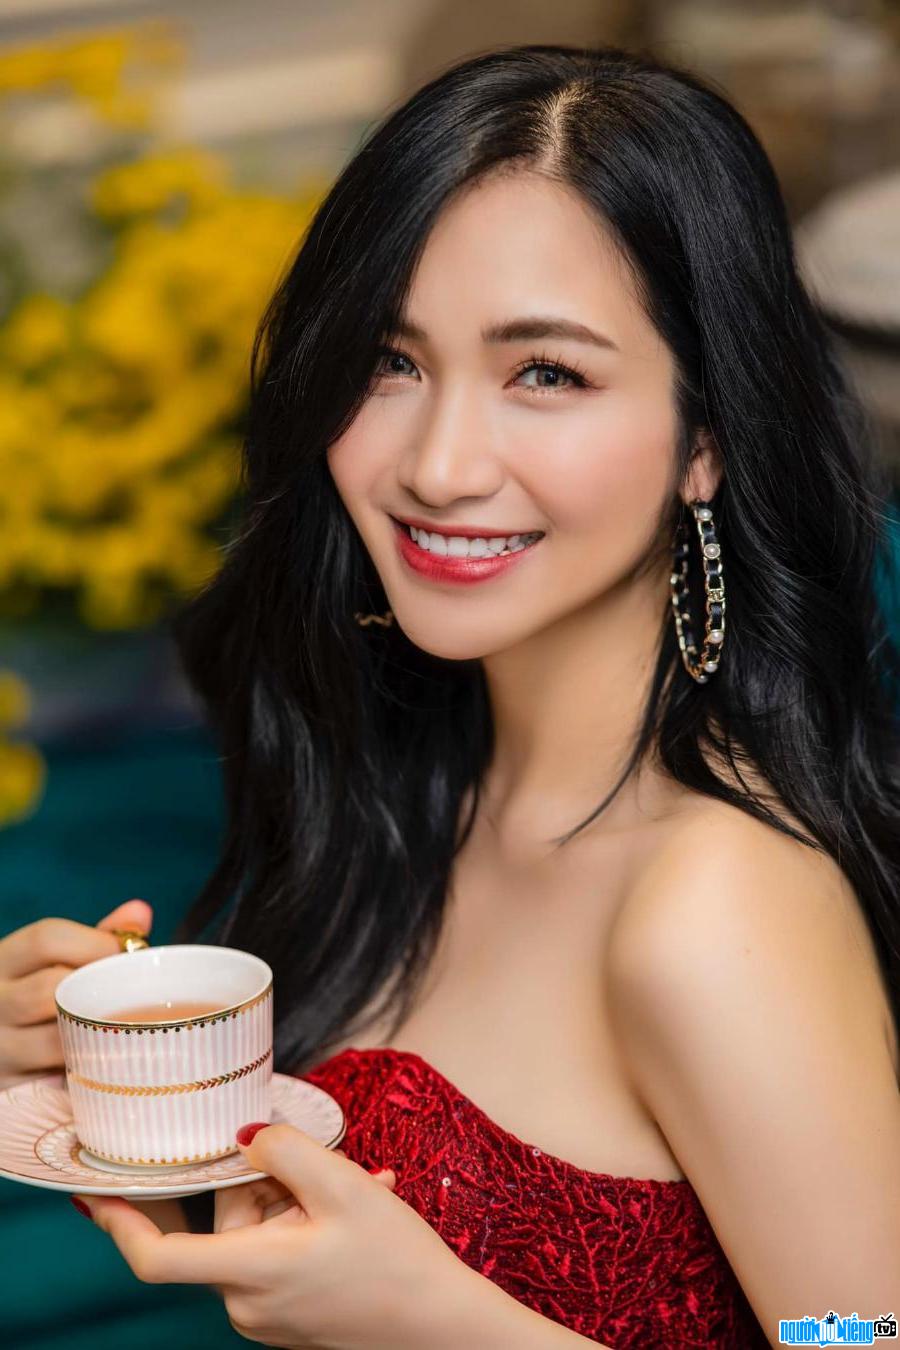  New image of singer Hoa Minzy